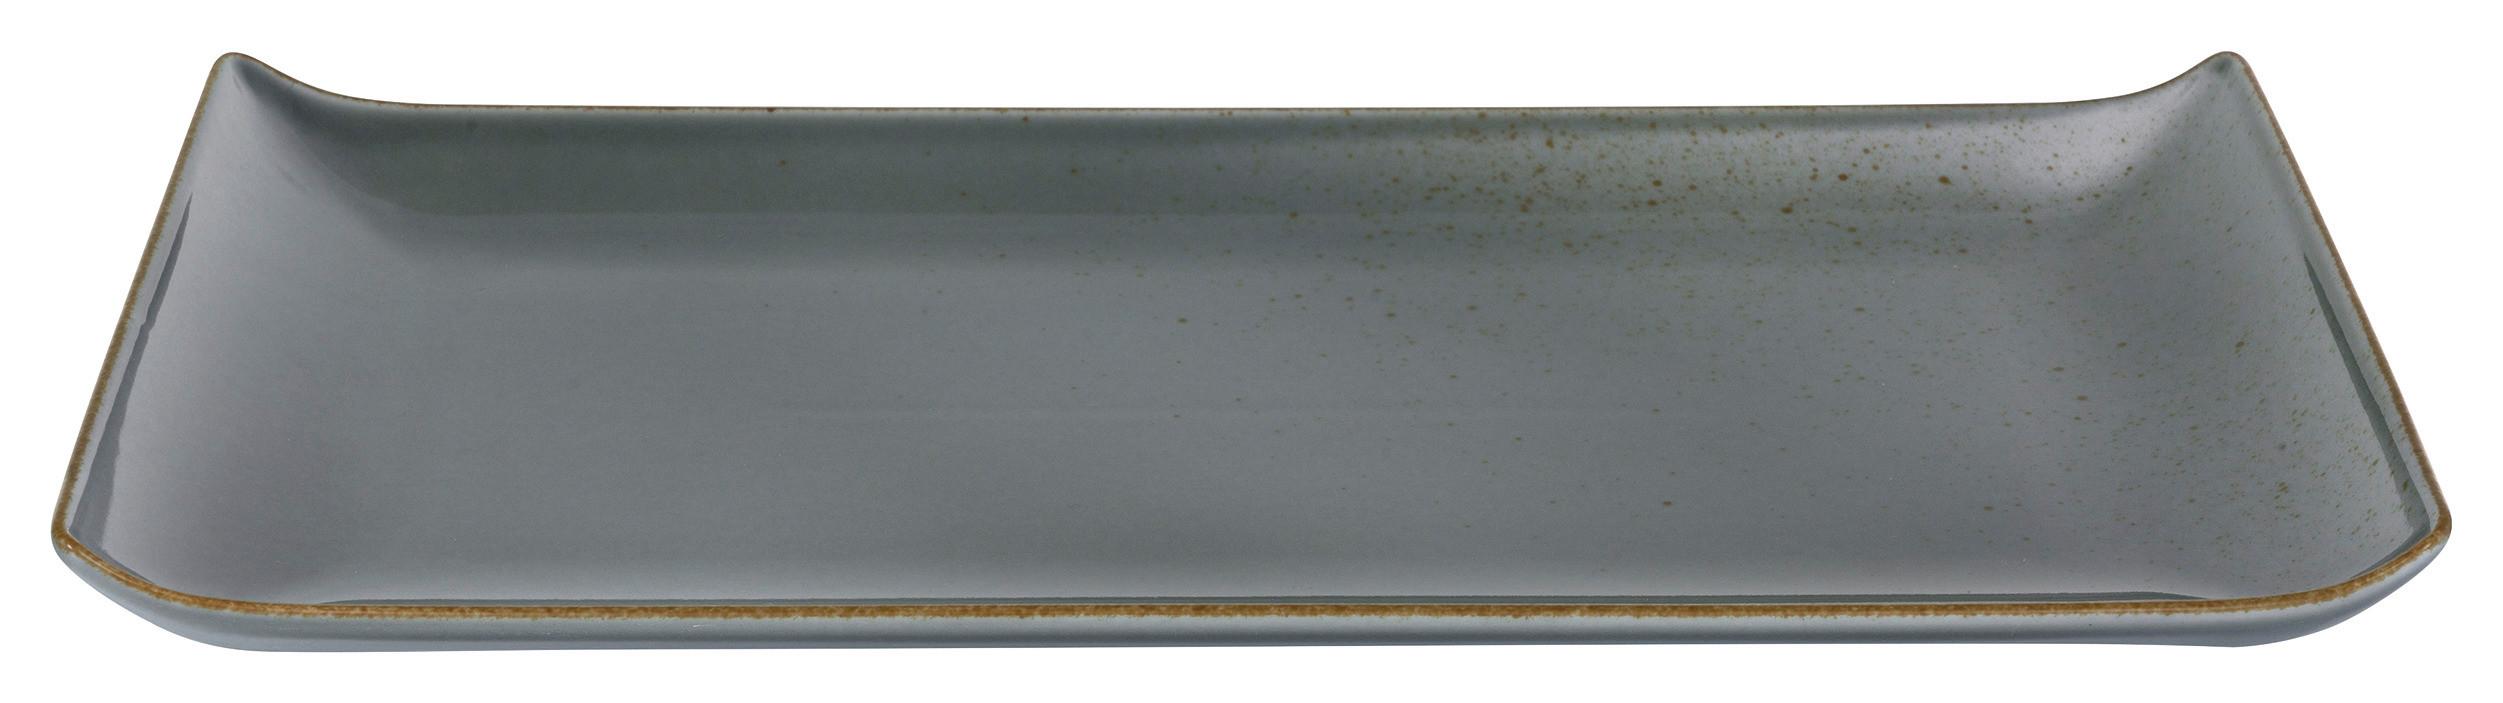 Servierplatte Capri in Grau - Grau, Modern, Keramik (32/16,5/2cm) - Premium Living